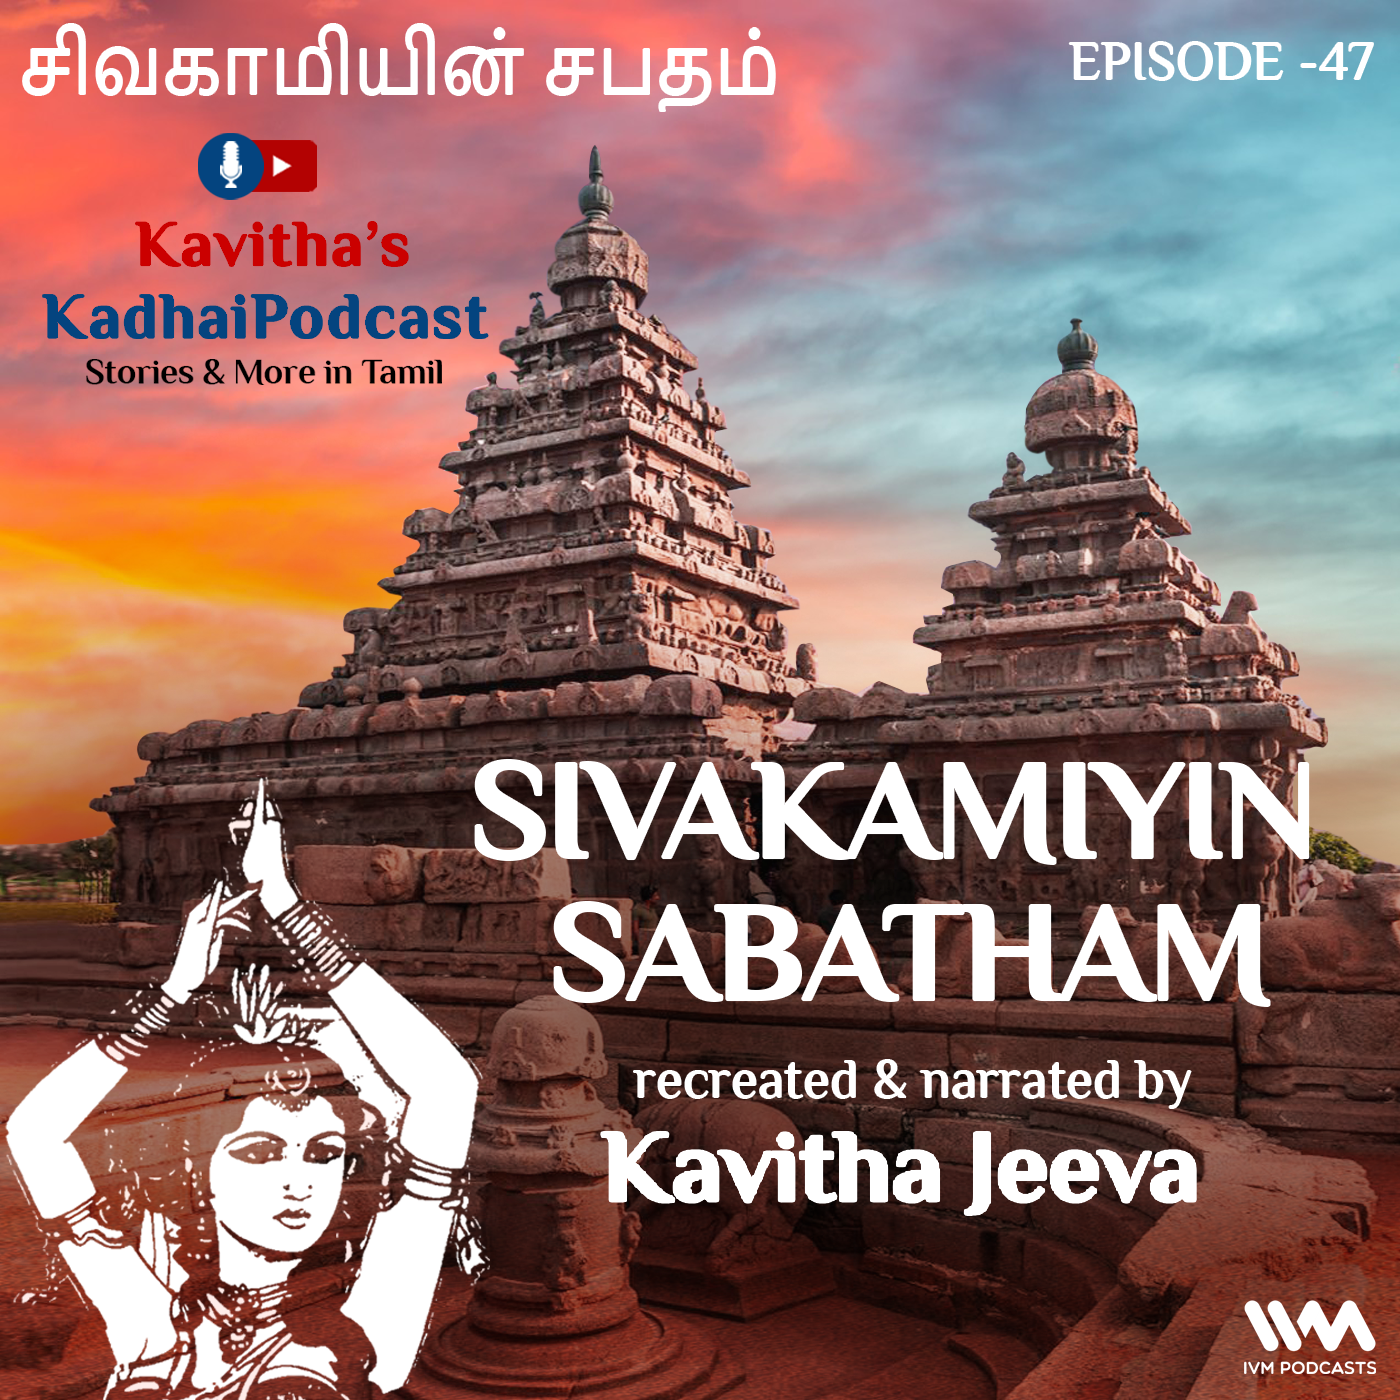 KadhaiPodcast's Sivakamiyin Sabatham - Episode # 47